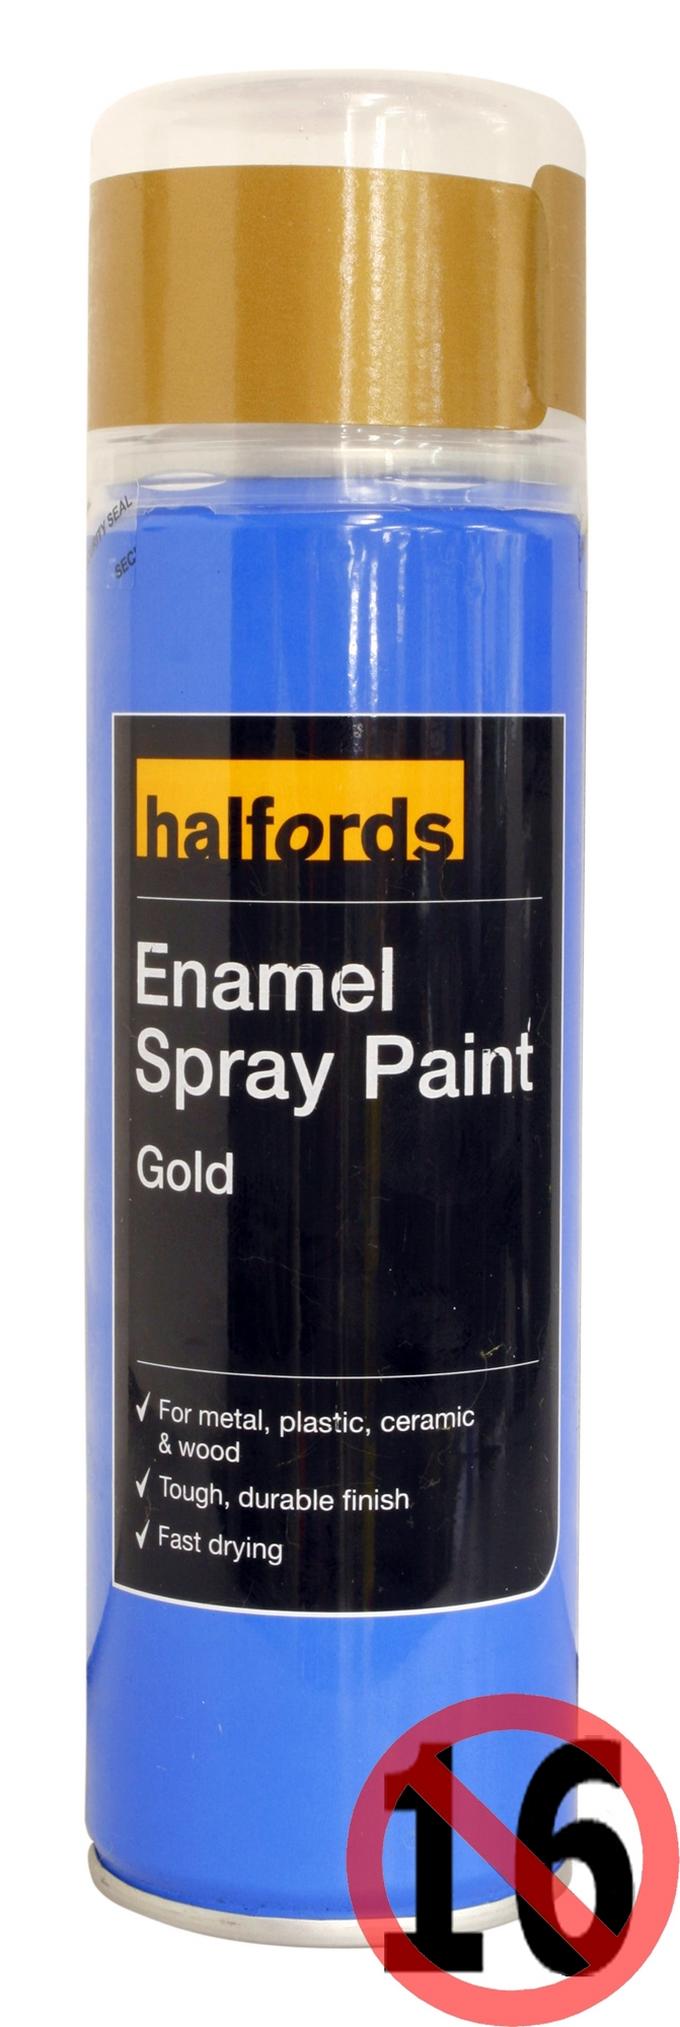 Halfords Enamel Spray Paint Gold 300ml